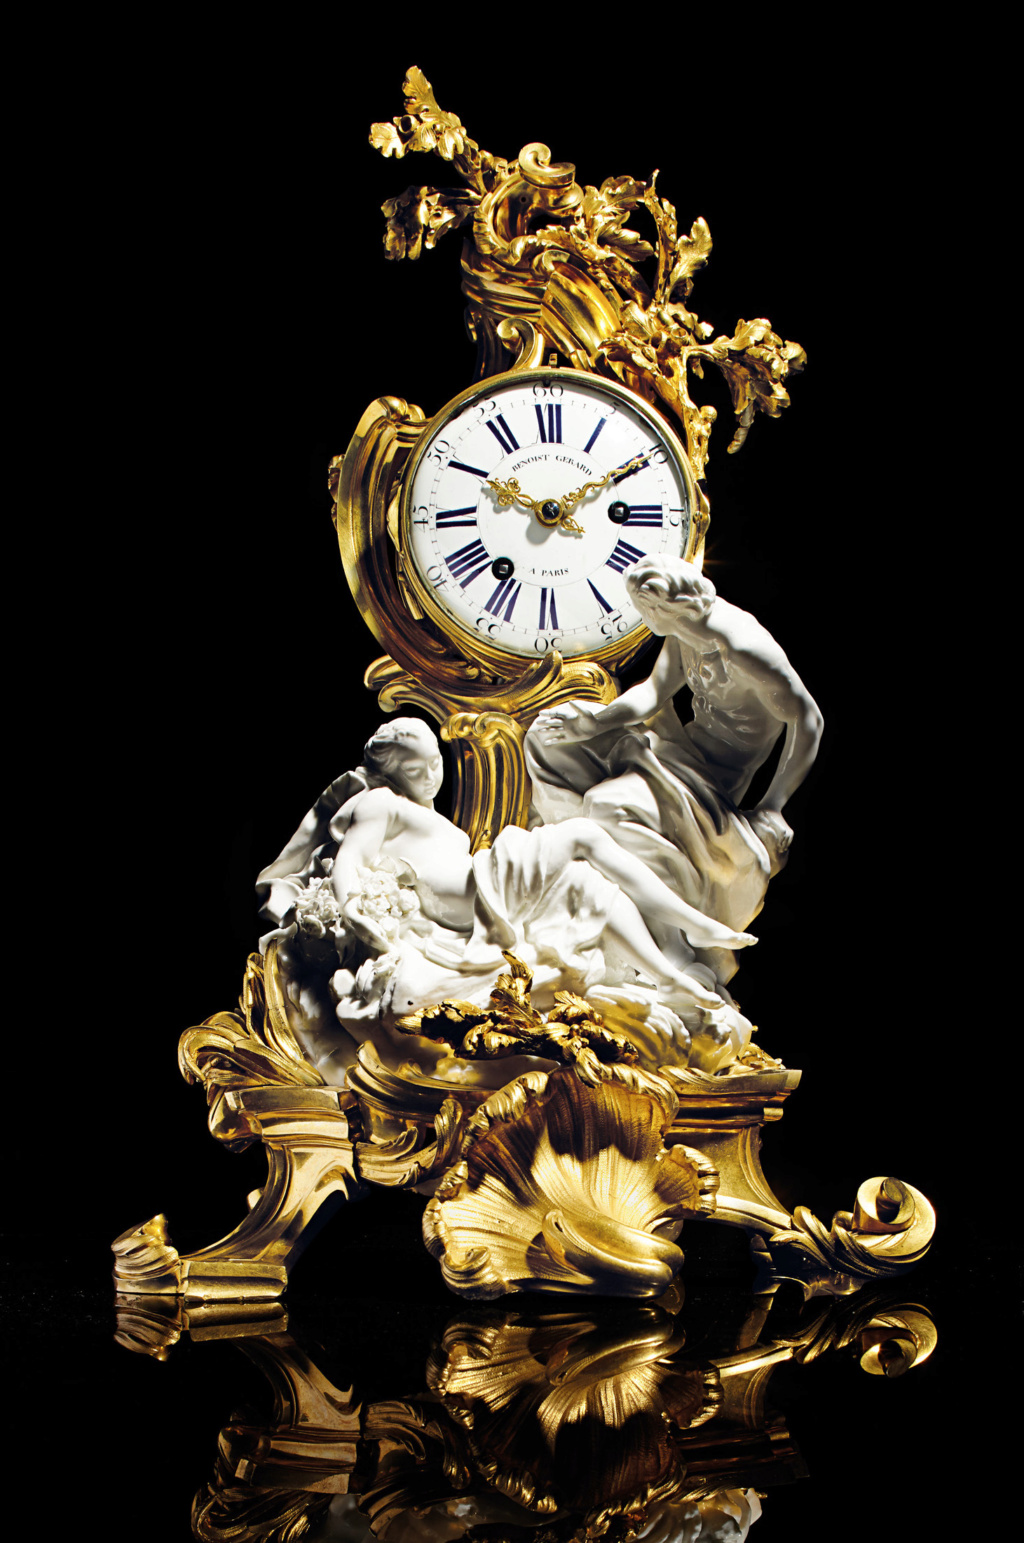 Horloges et pendules du XVIIIe siècle - Page 2 2019_n17